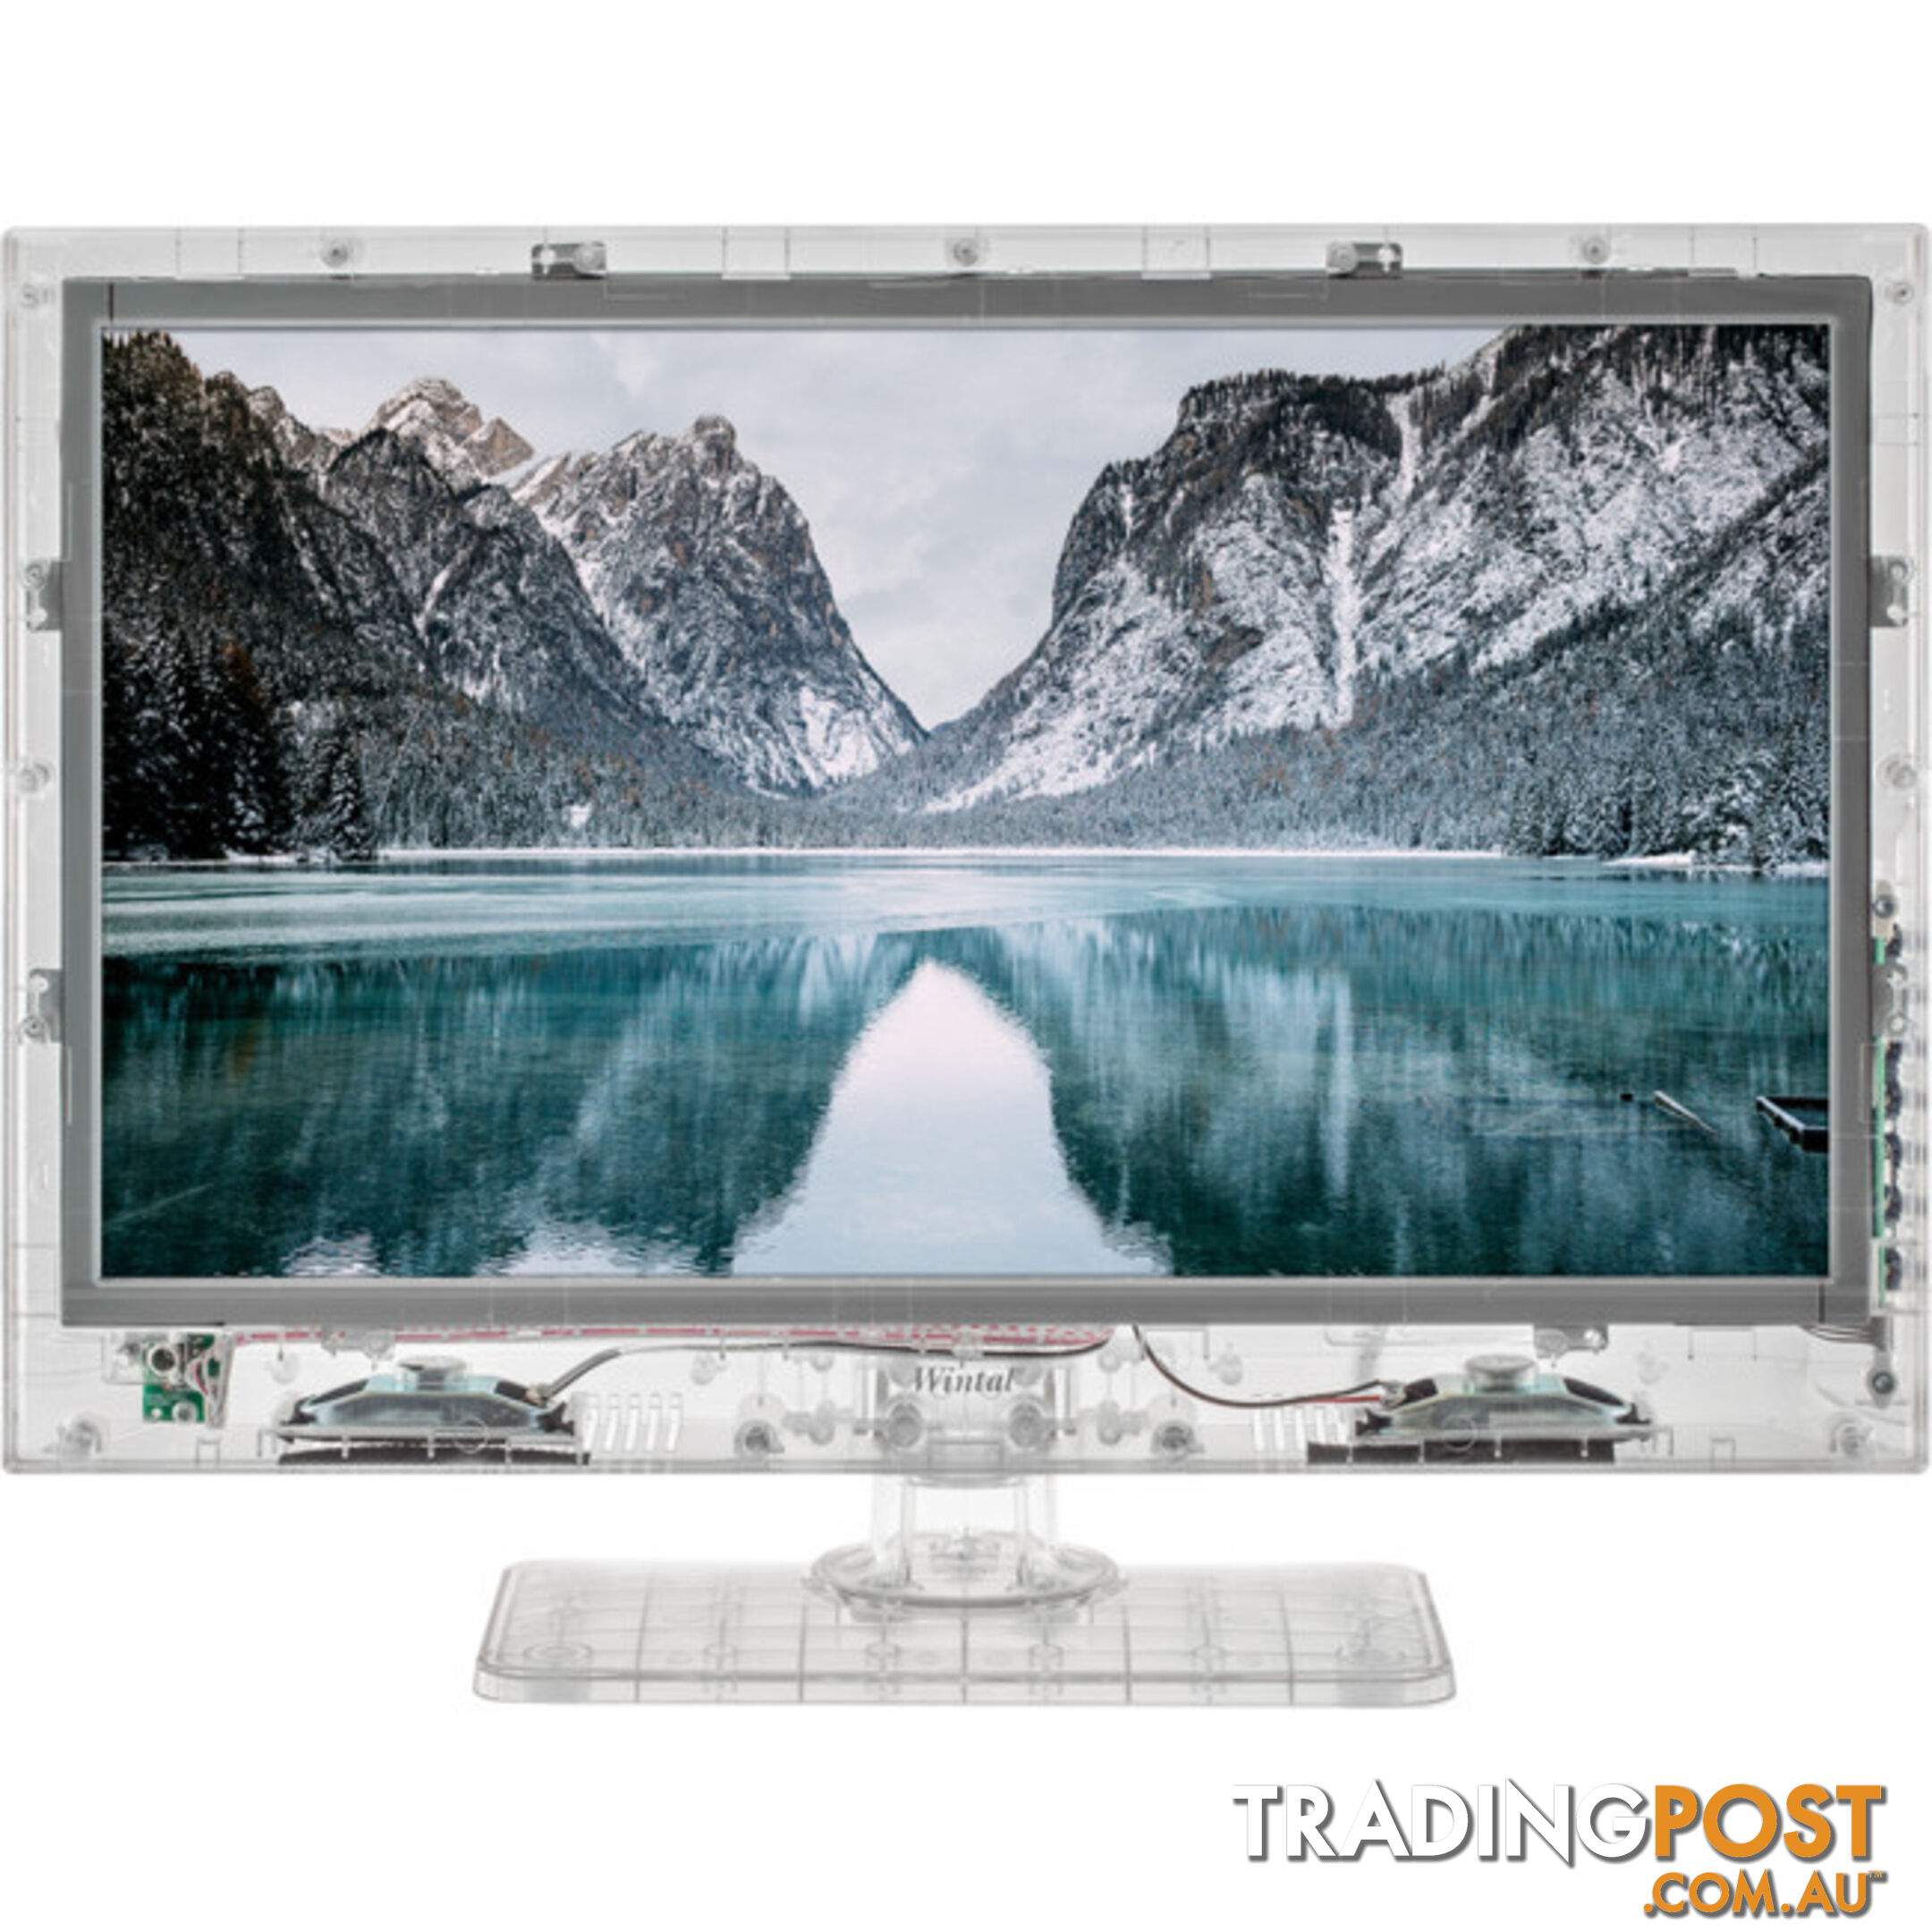 19LED19HDL 19" TRANSPARENT HD LED TV CLEAR FRAME / LCD 150CM LEAD